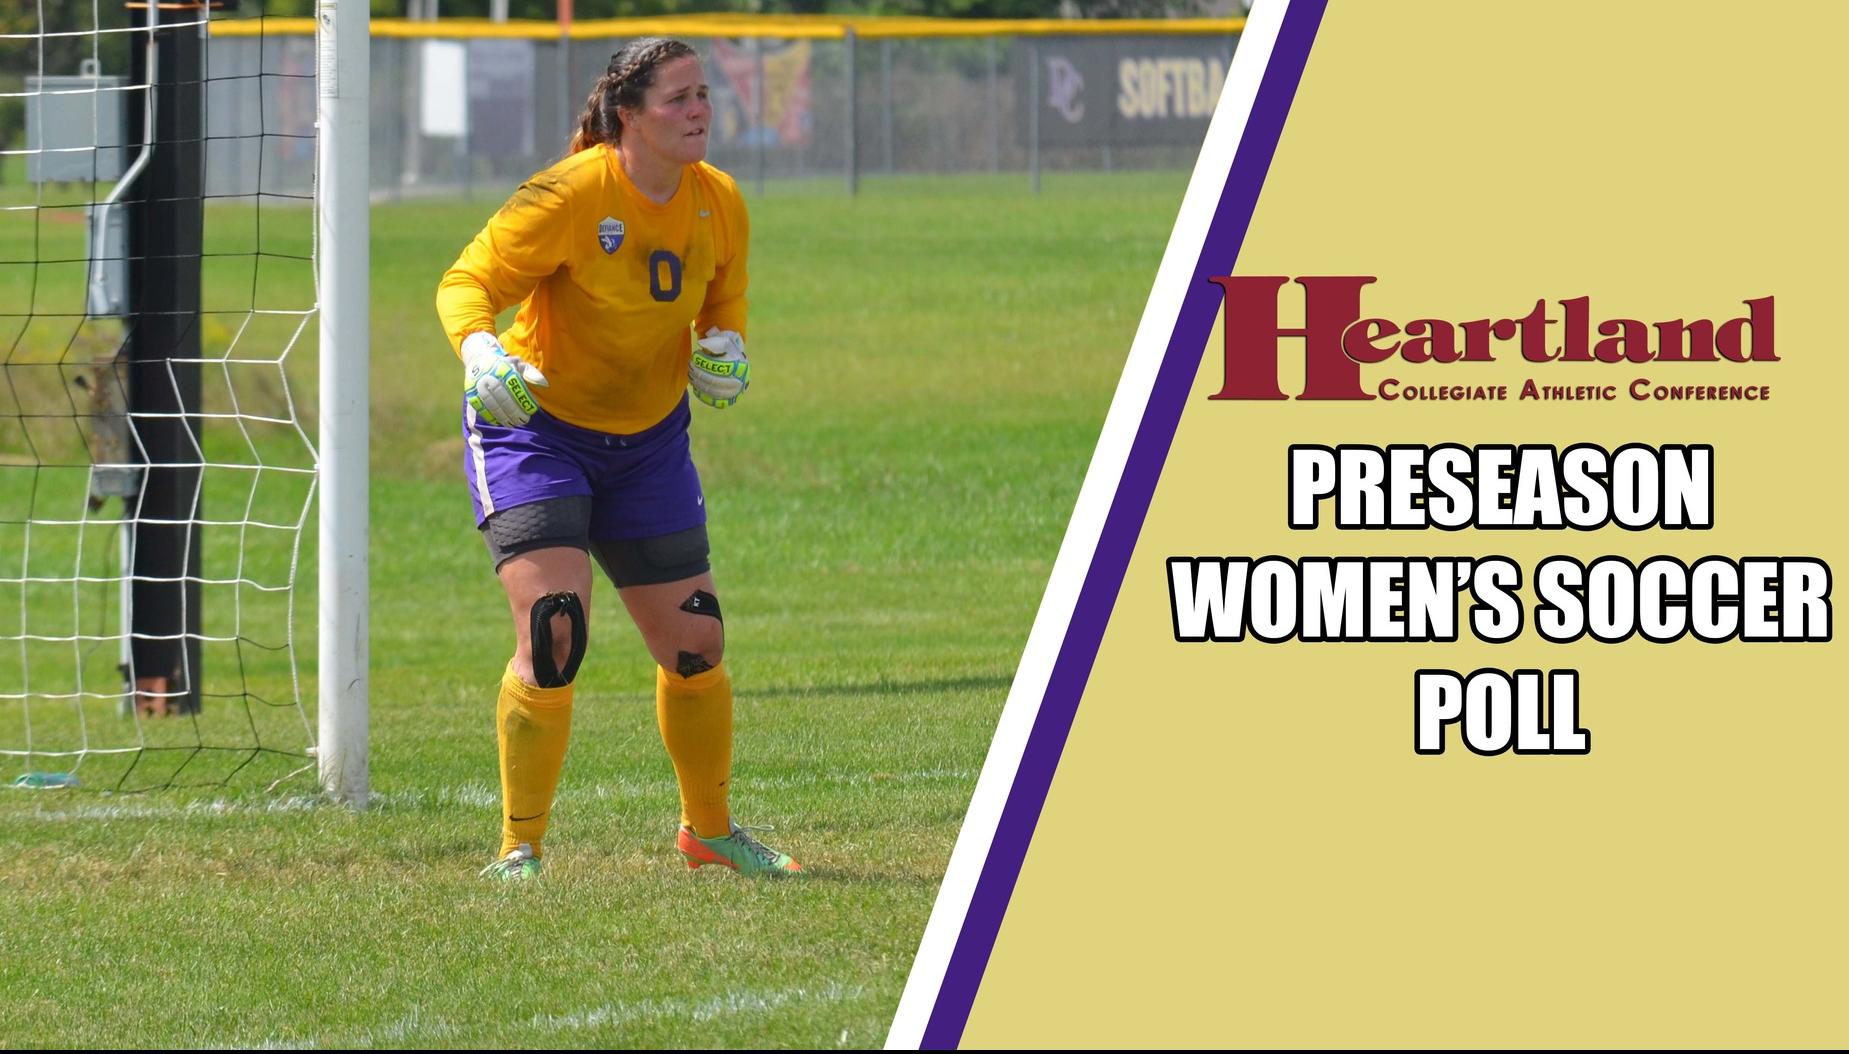 HCAC Announces Women's Soccer Preseason Poll